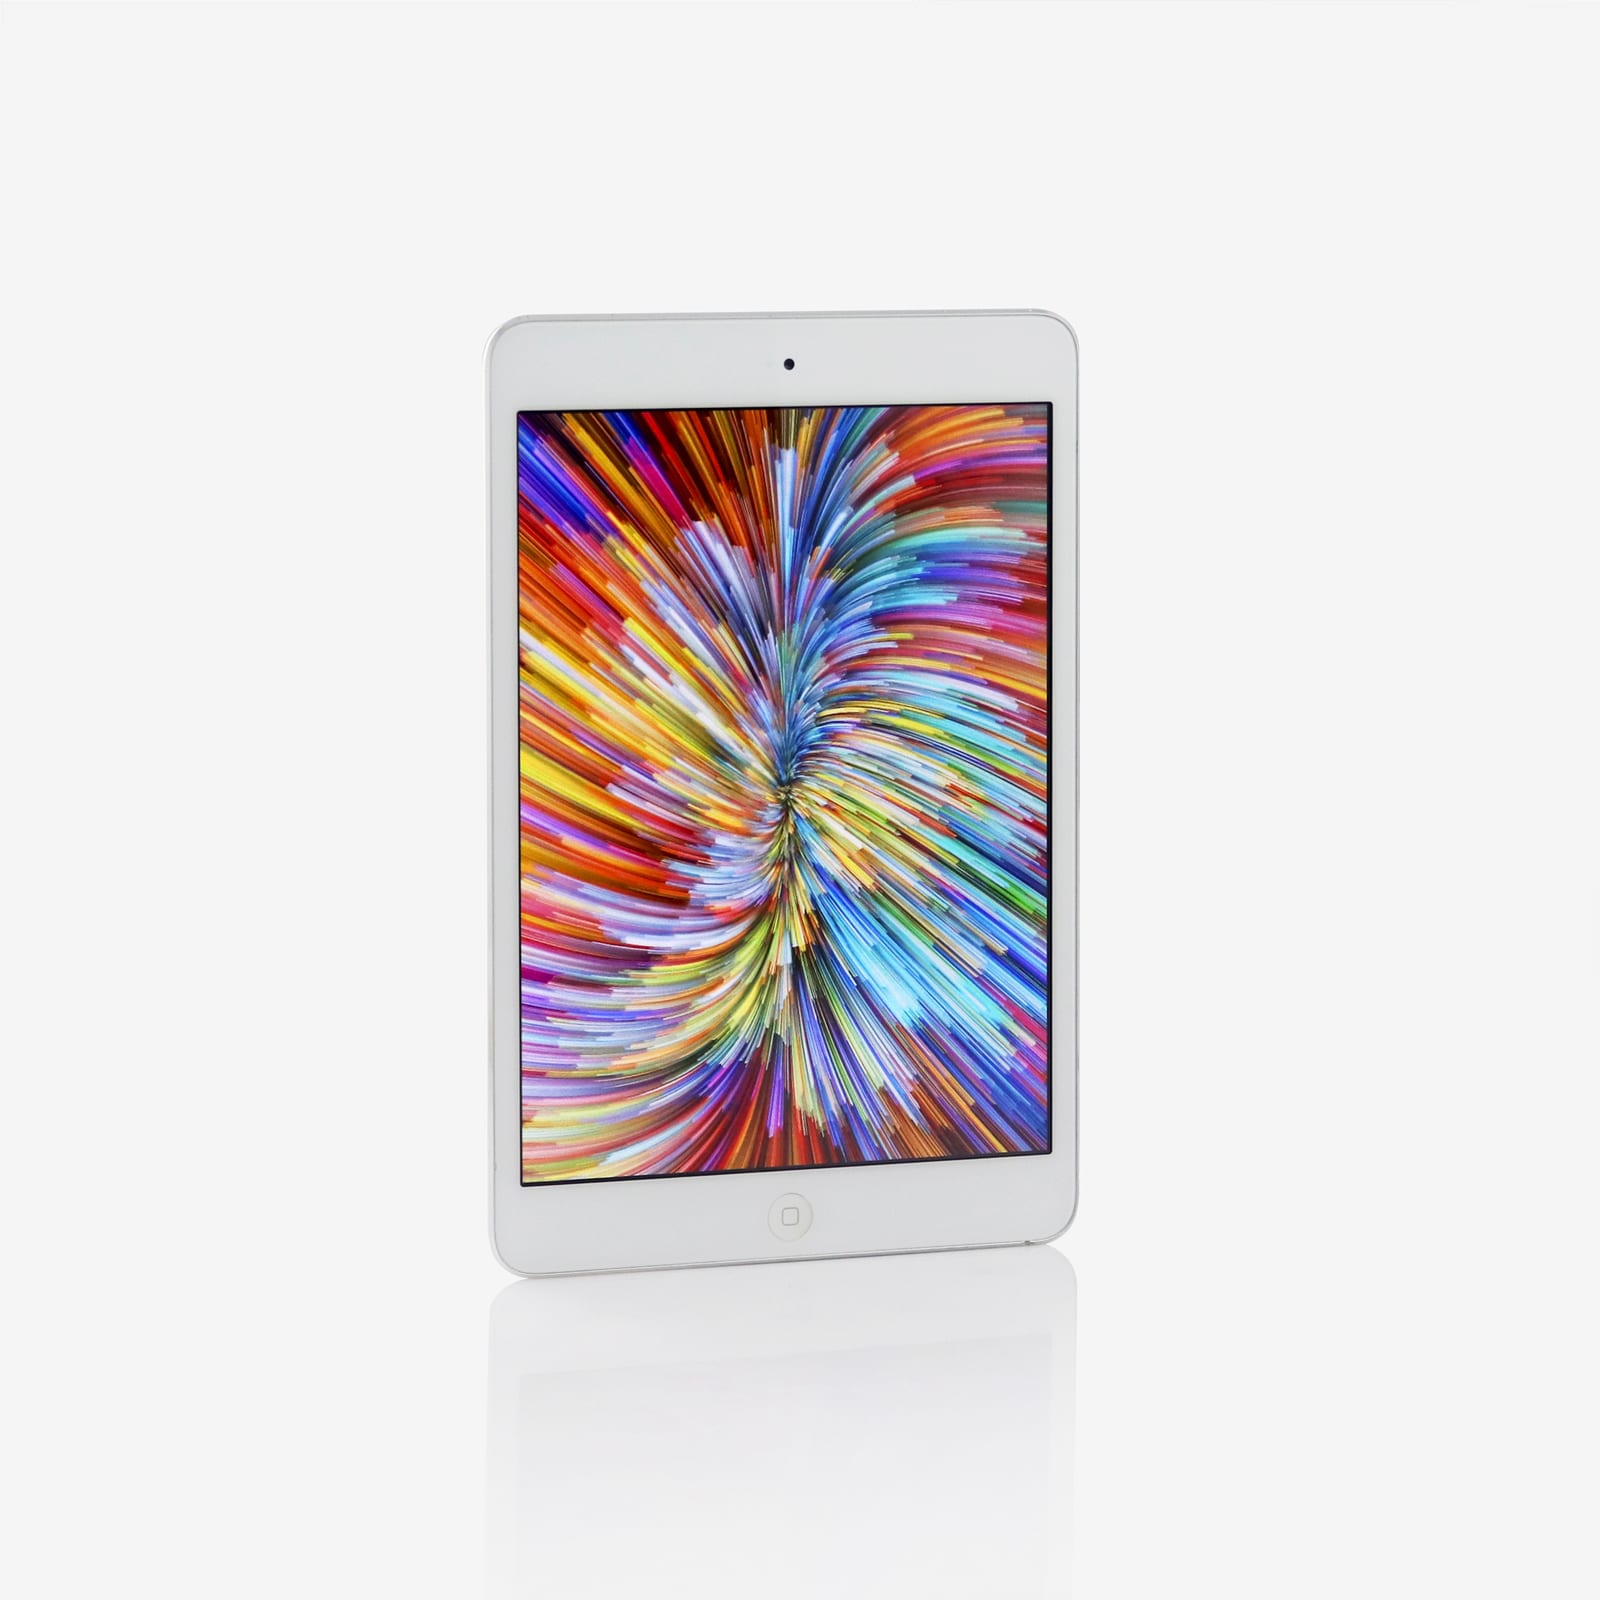 1 x iPad mini (Wi-Fi) Silver